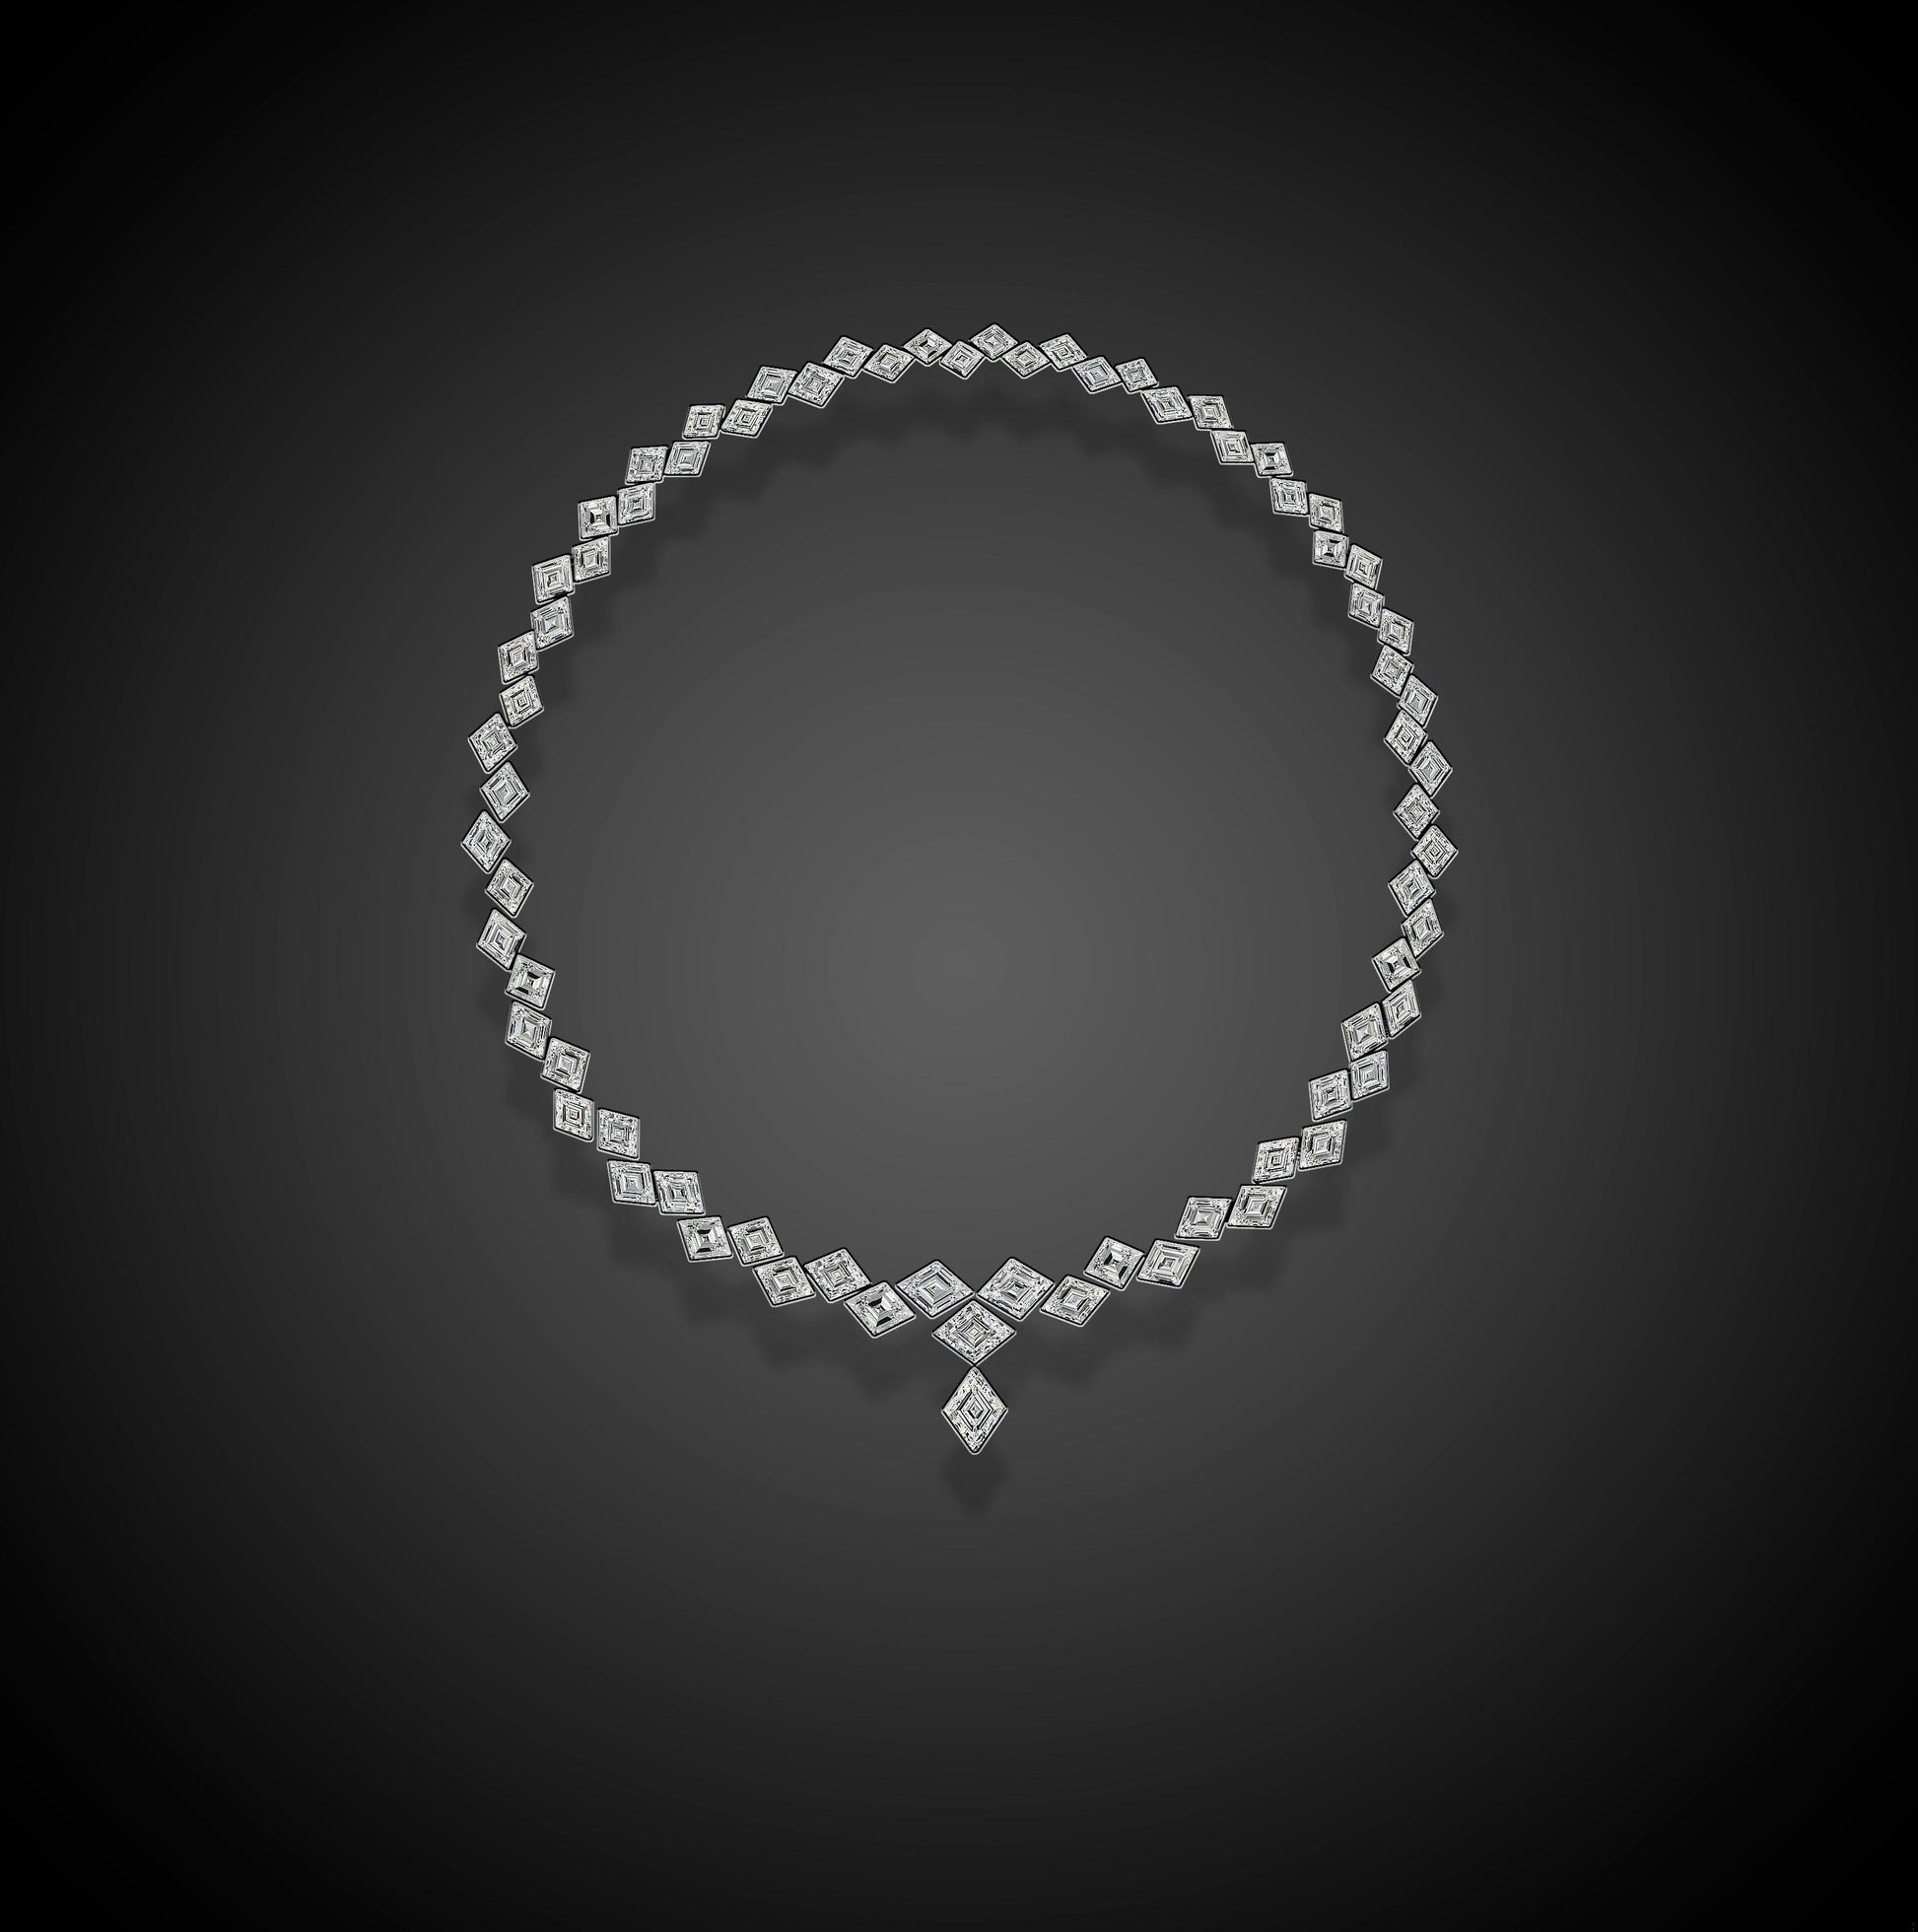 Emilio Jewelry Gia Certified 39.00 Carat Kite Shape Diamond Necklace